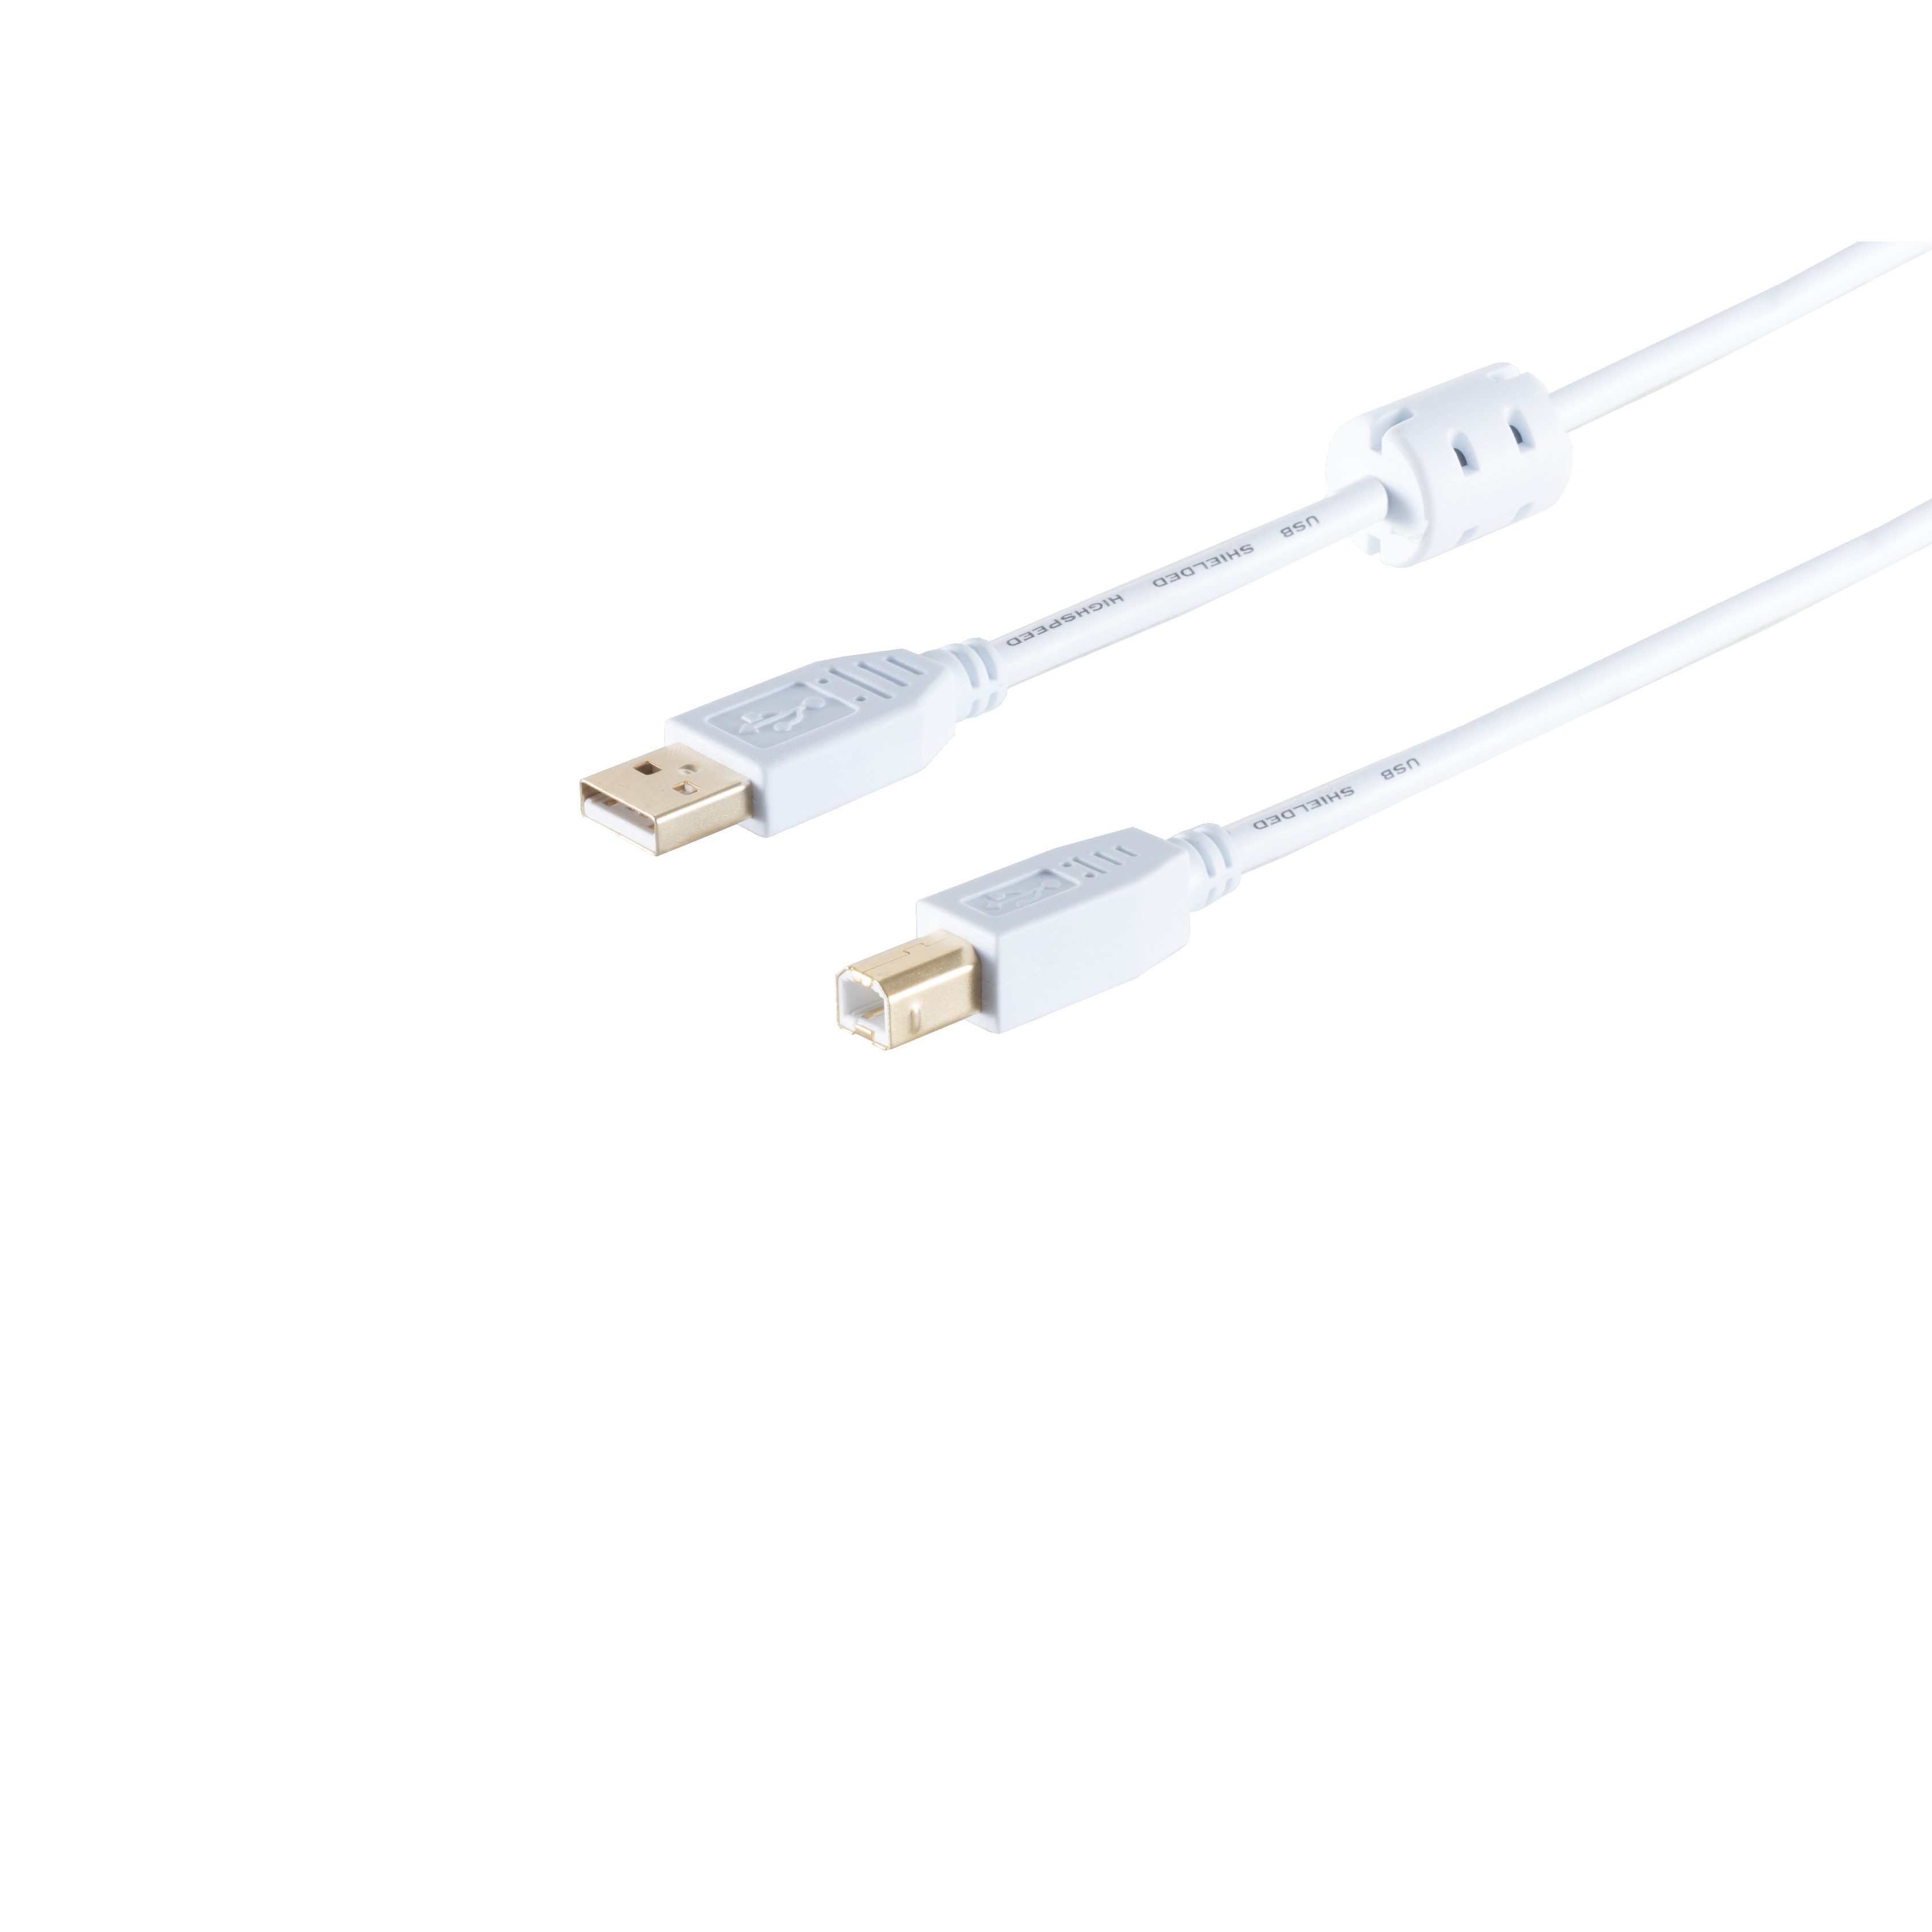 S/CONN MAXIMUM CONNECTIVITY 1,0m Ferrit, Kabel 2.0, Stecker, USB Speed High Kabel A/B weiß, 2.0 mit USB USB